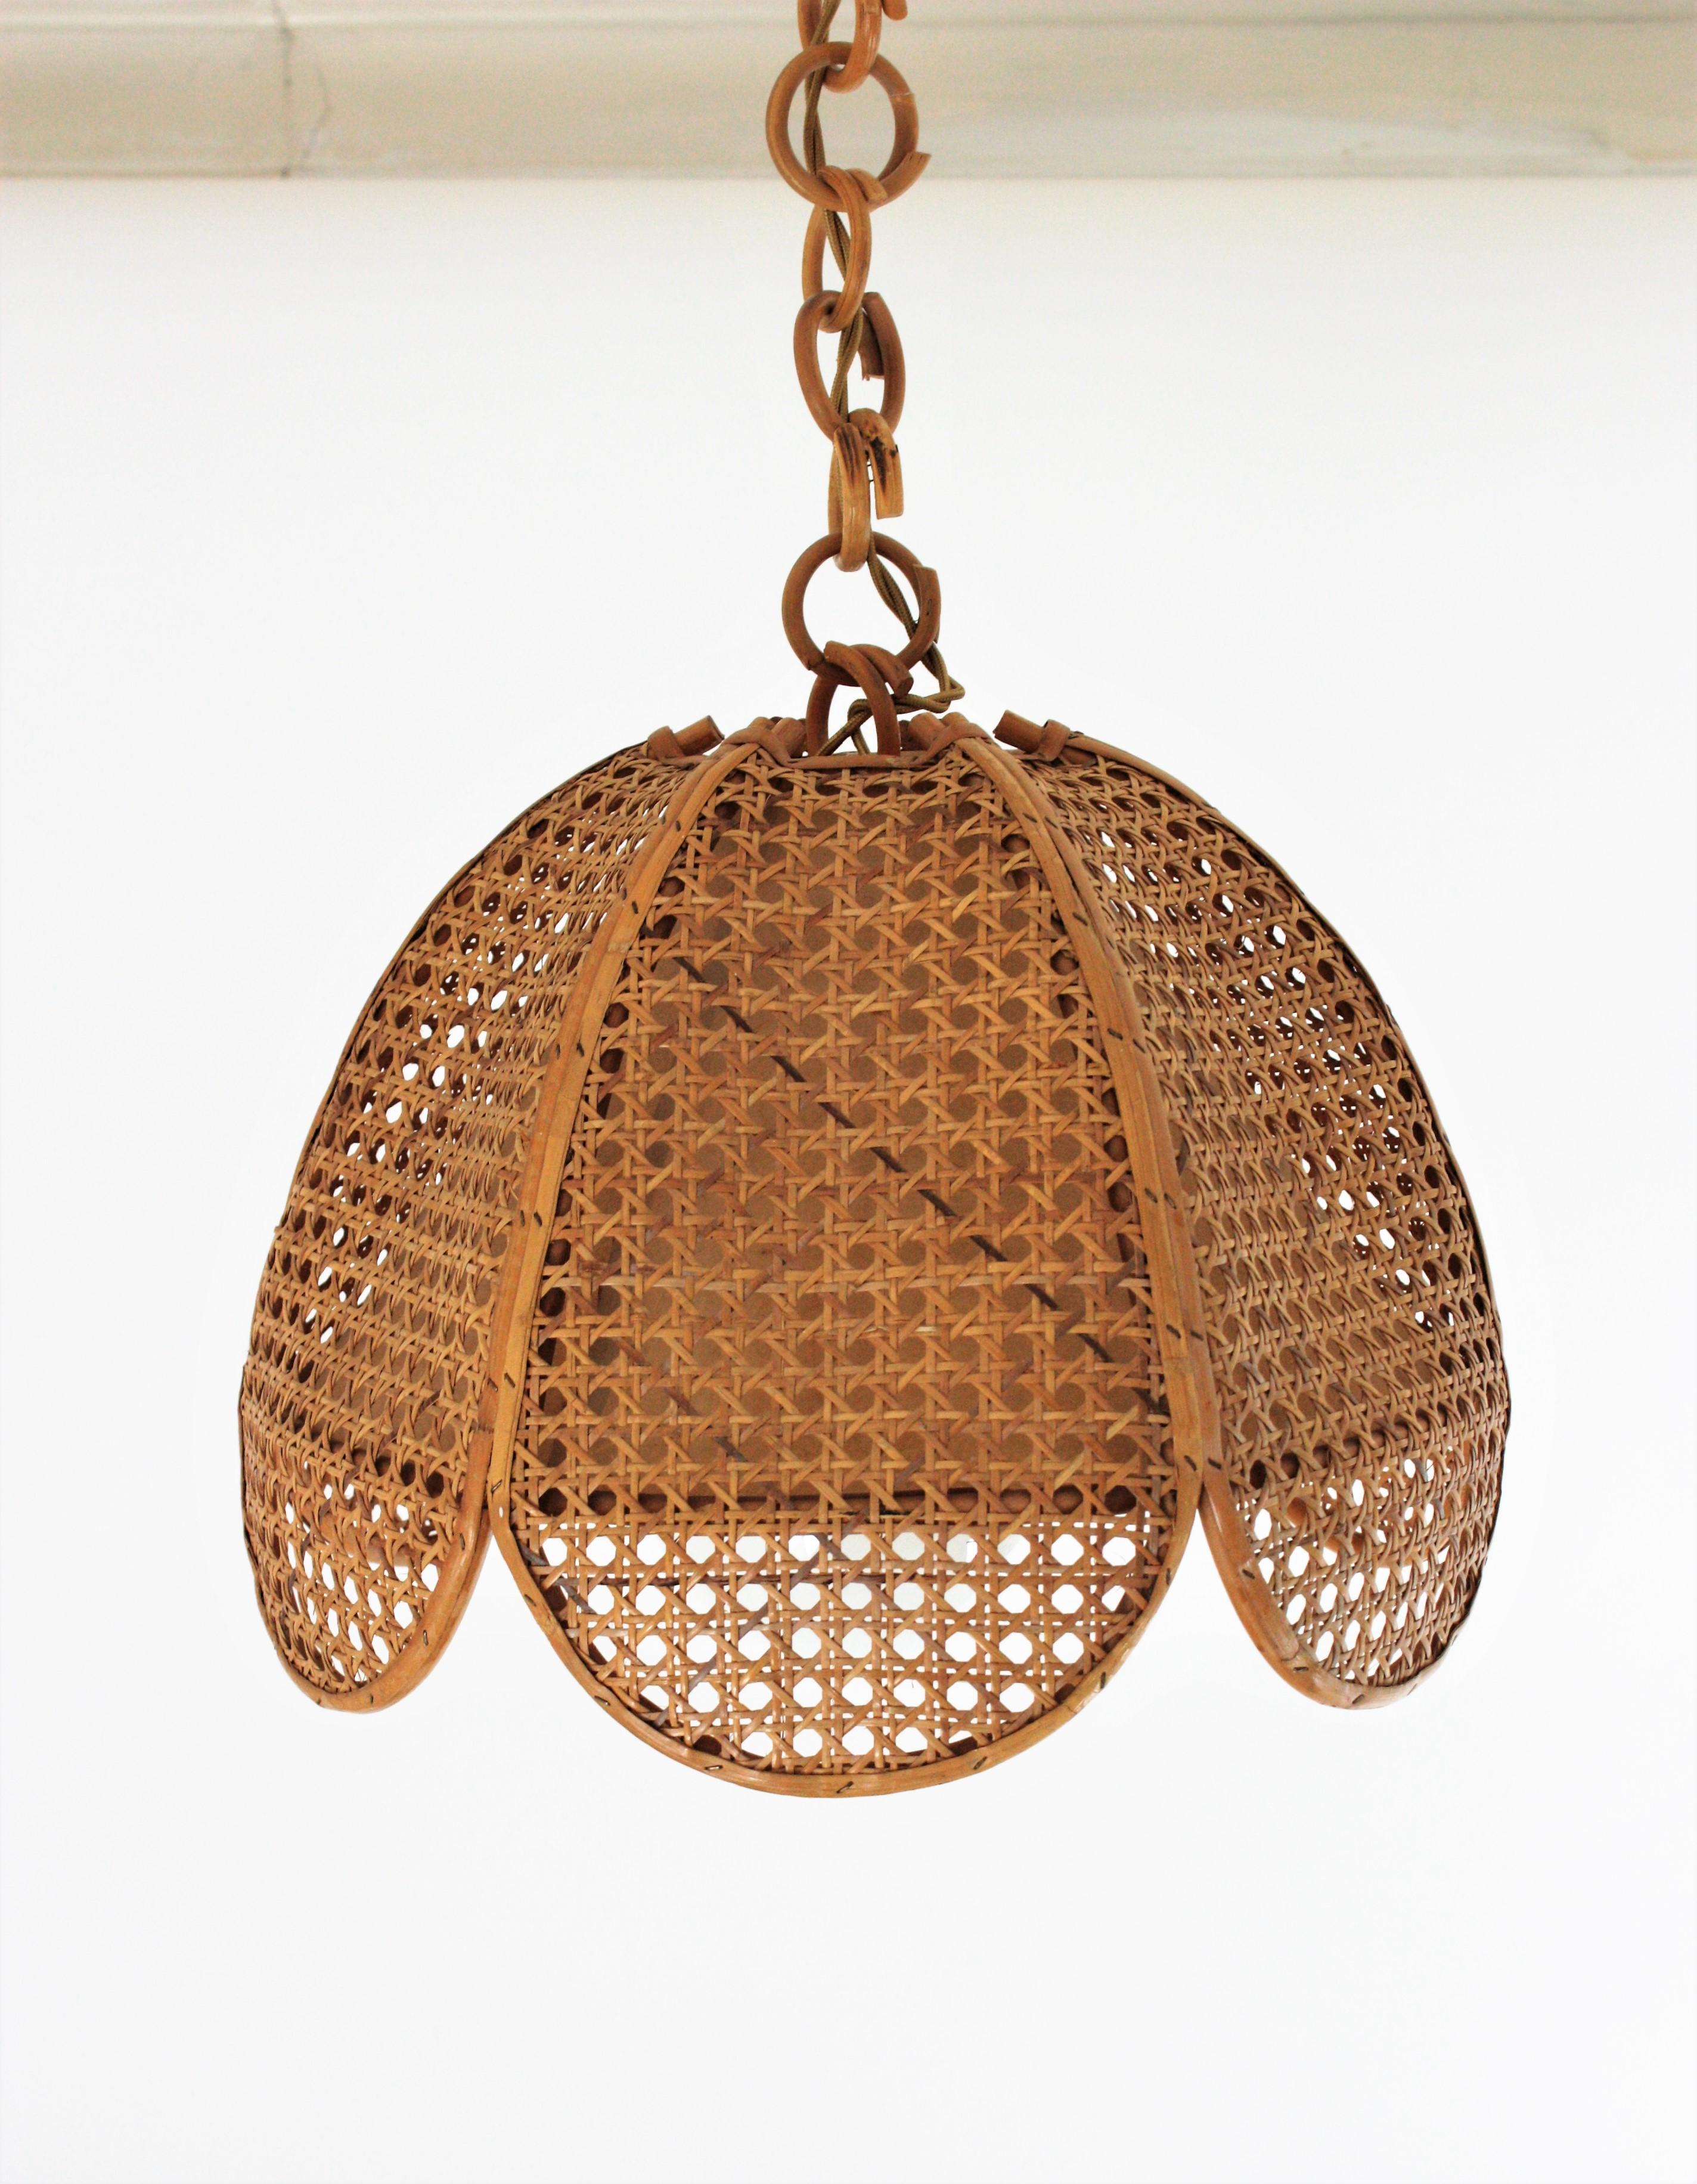 Spanish Modernist Woven Wicker Rattan Palm Pendant Light, 1960s For Sale 4